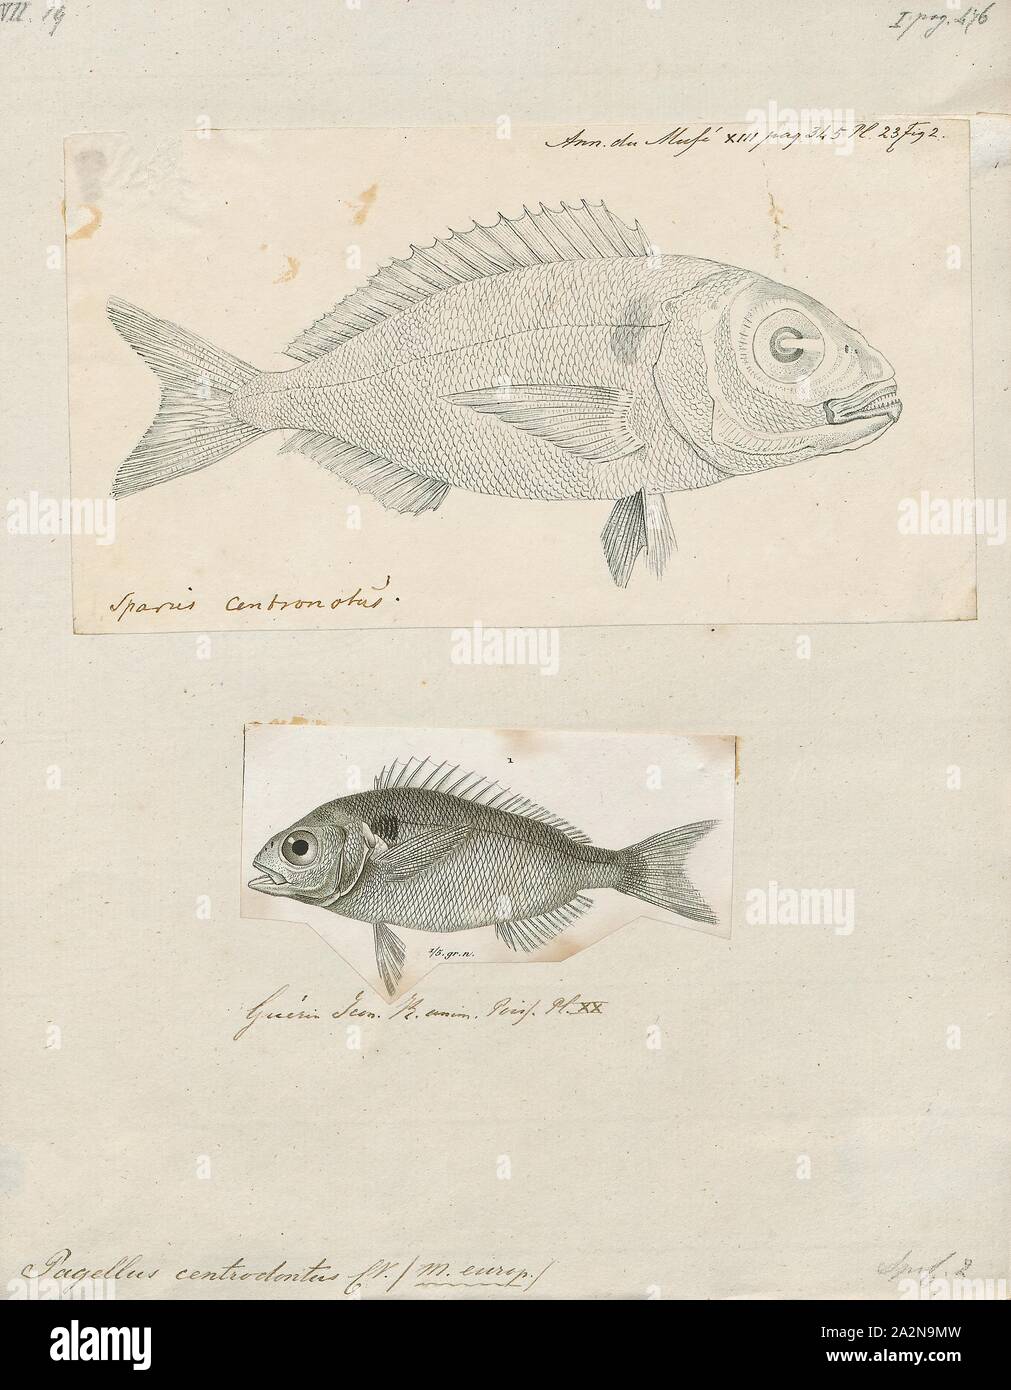 Pagellus centrodontus, Print, 1700-1880 Stock Photo